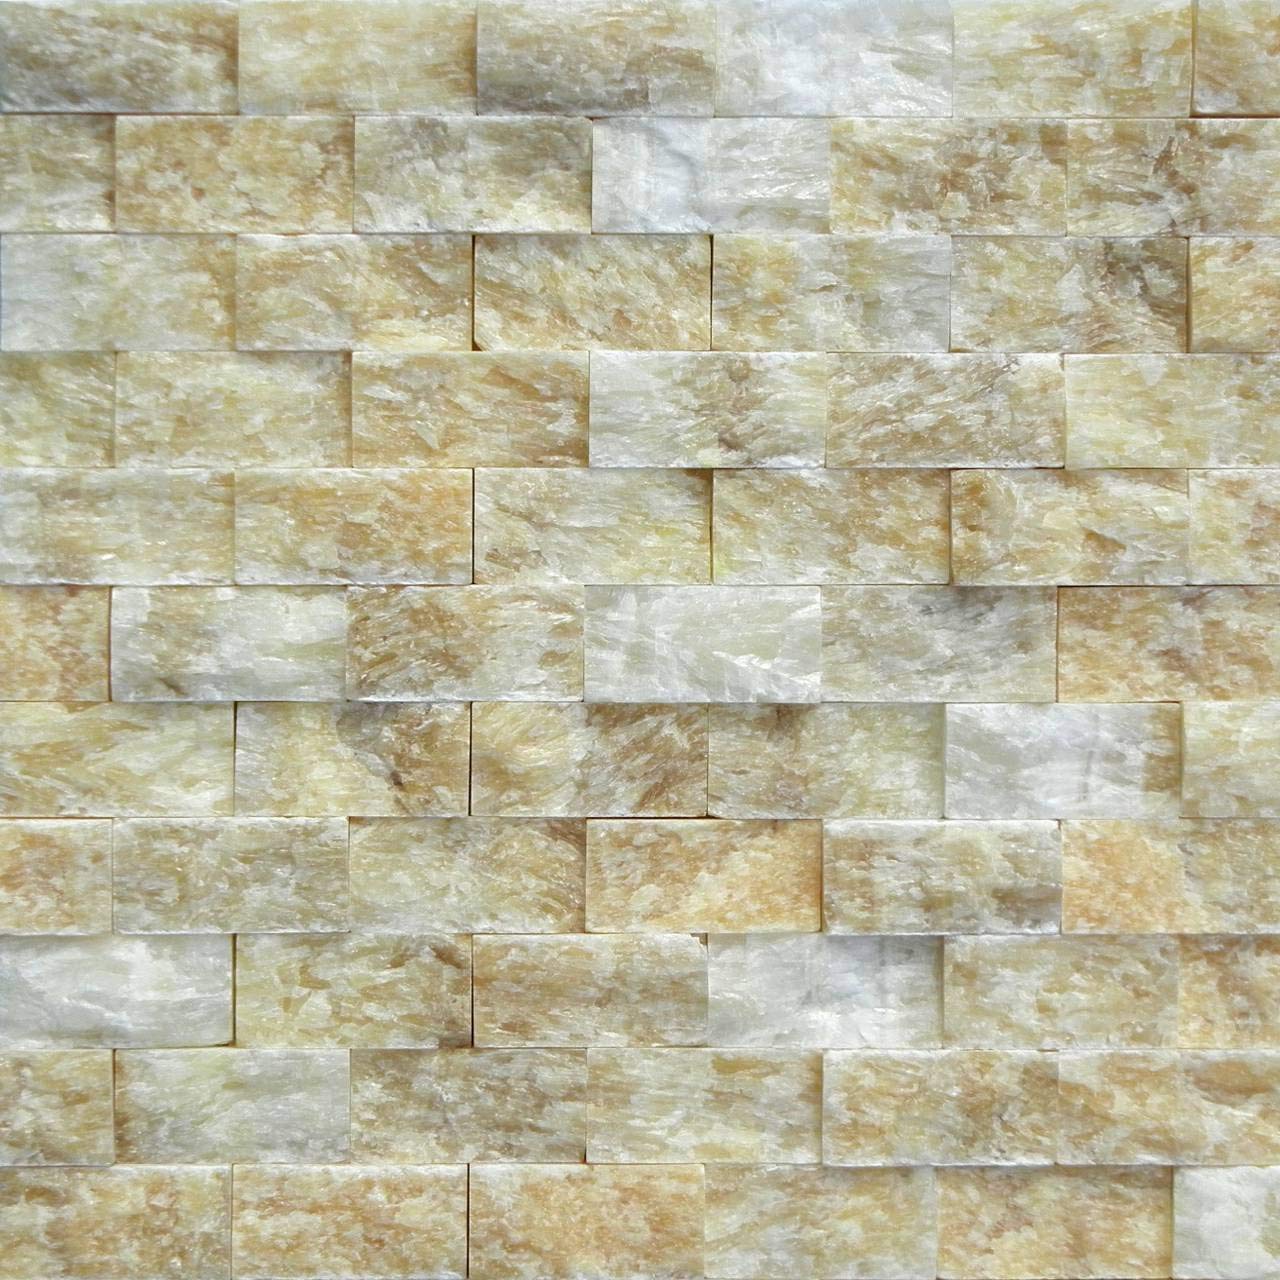 Honey Onyx Marble 1x2 Inch  Splitface Mosaic Tiles